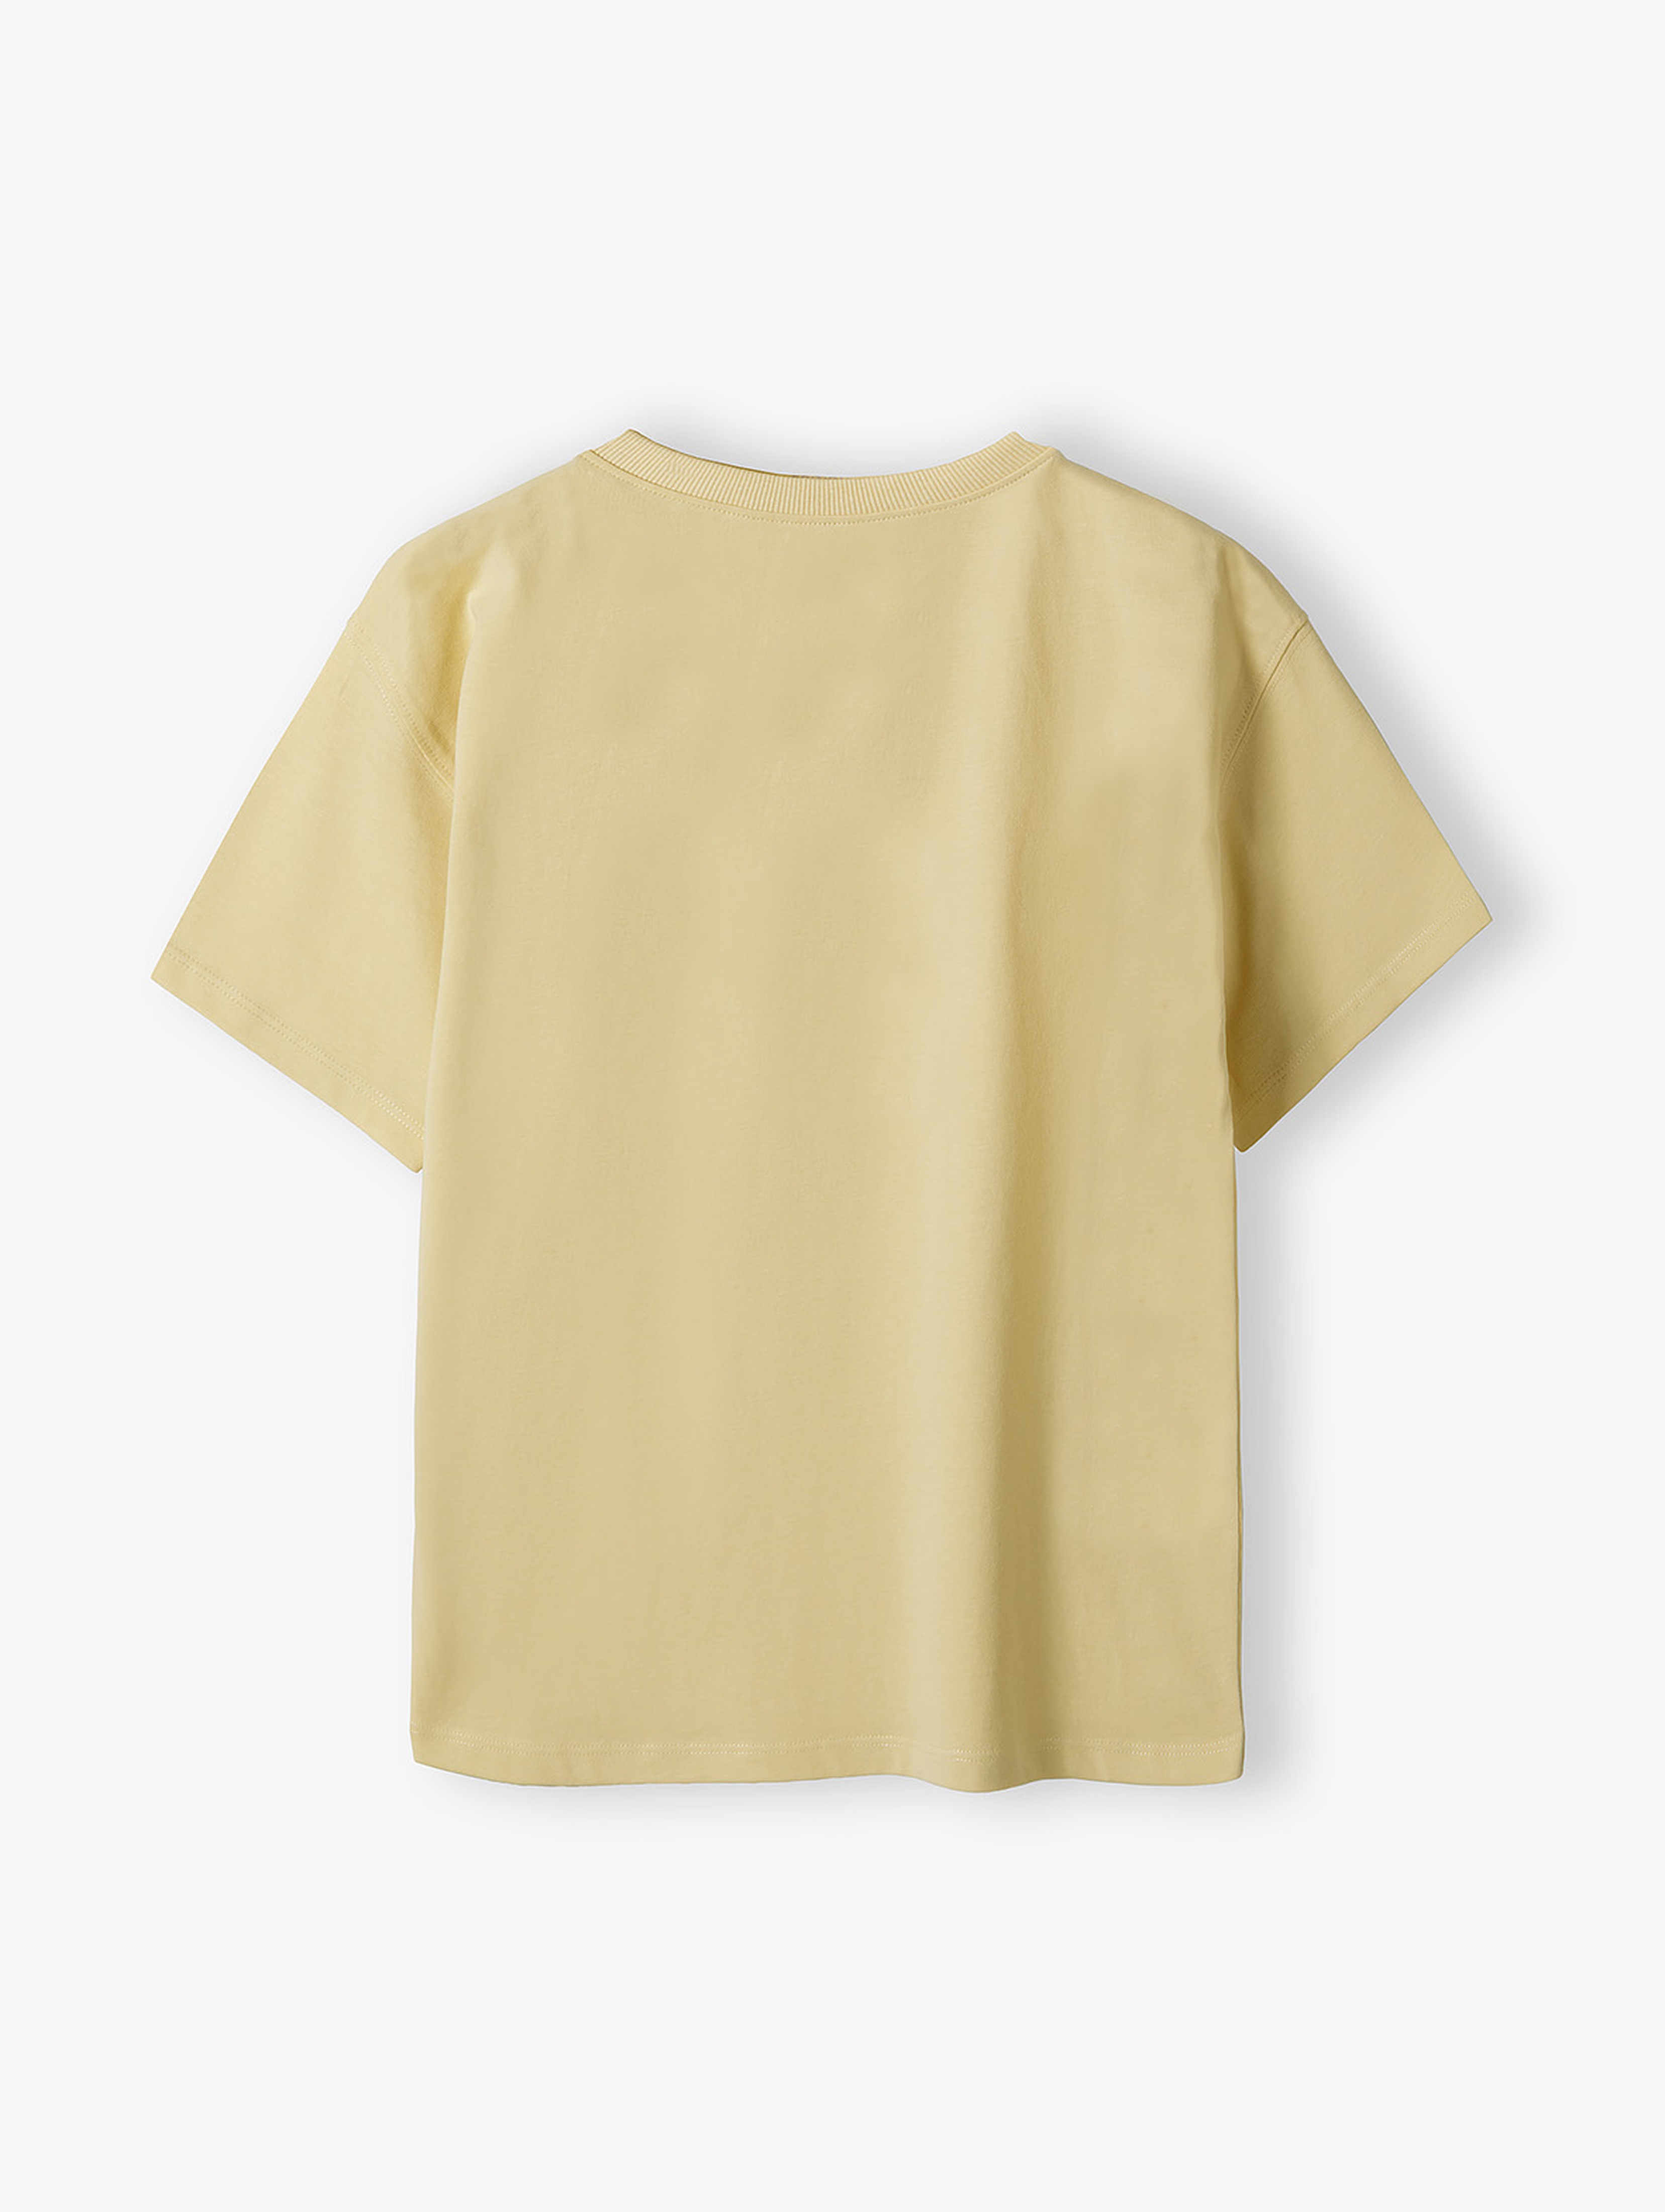 T-shirt dla dziecka - żółty - Limited Edition